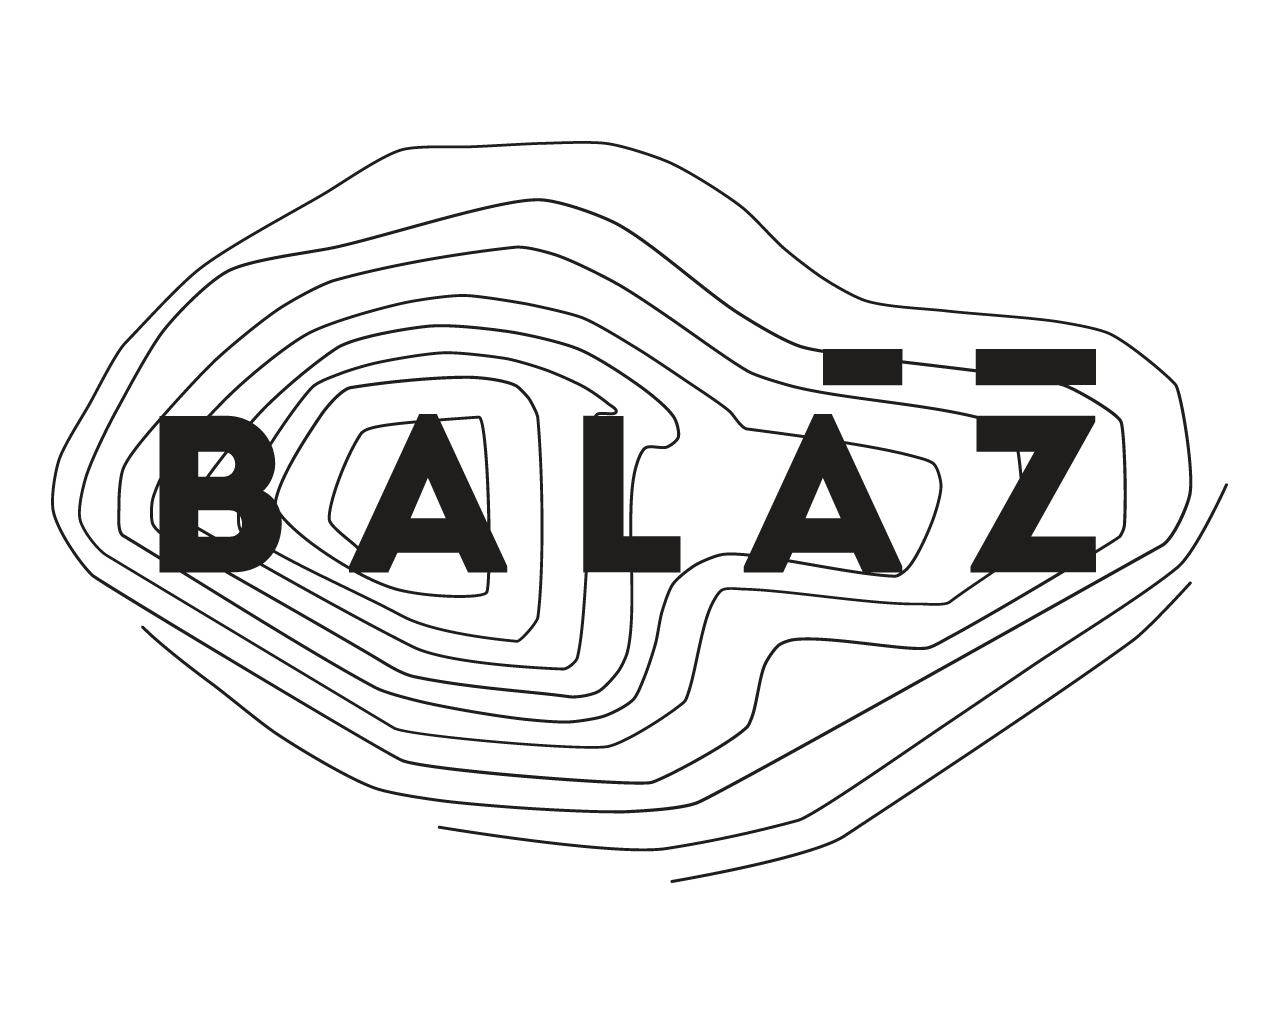 balaz_logo_